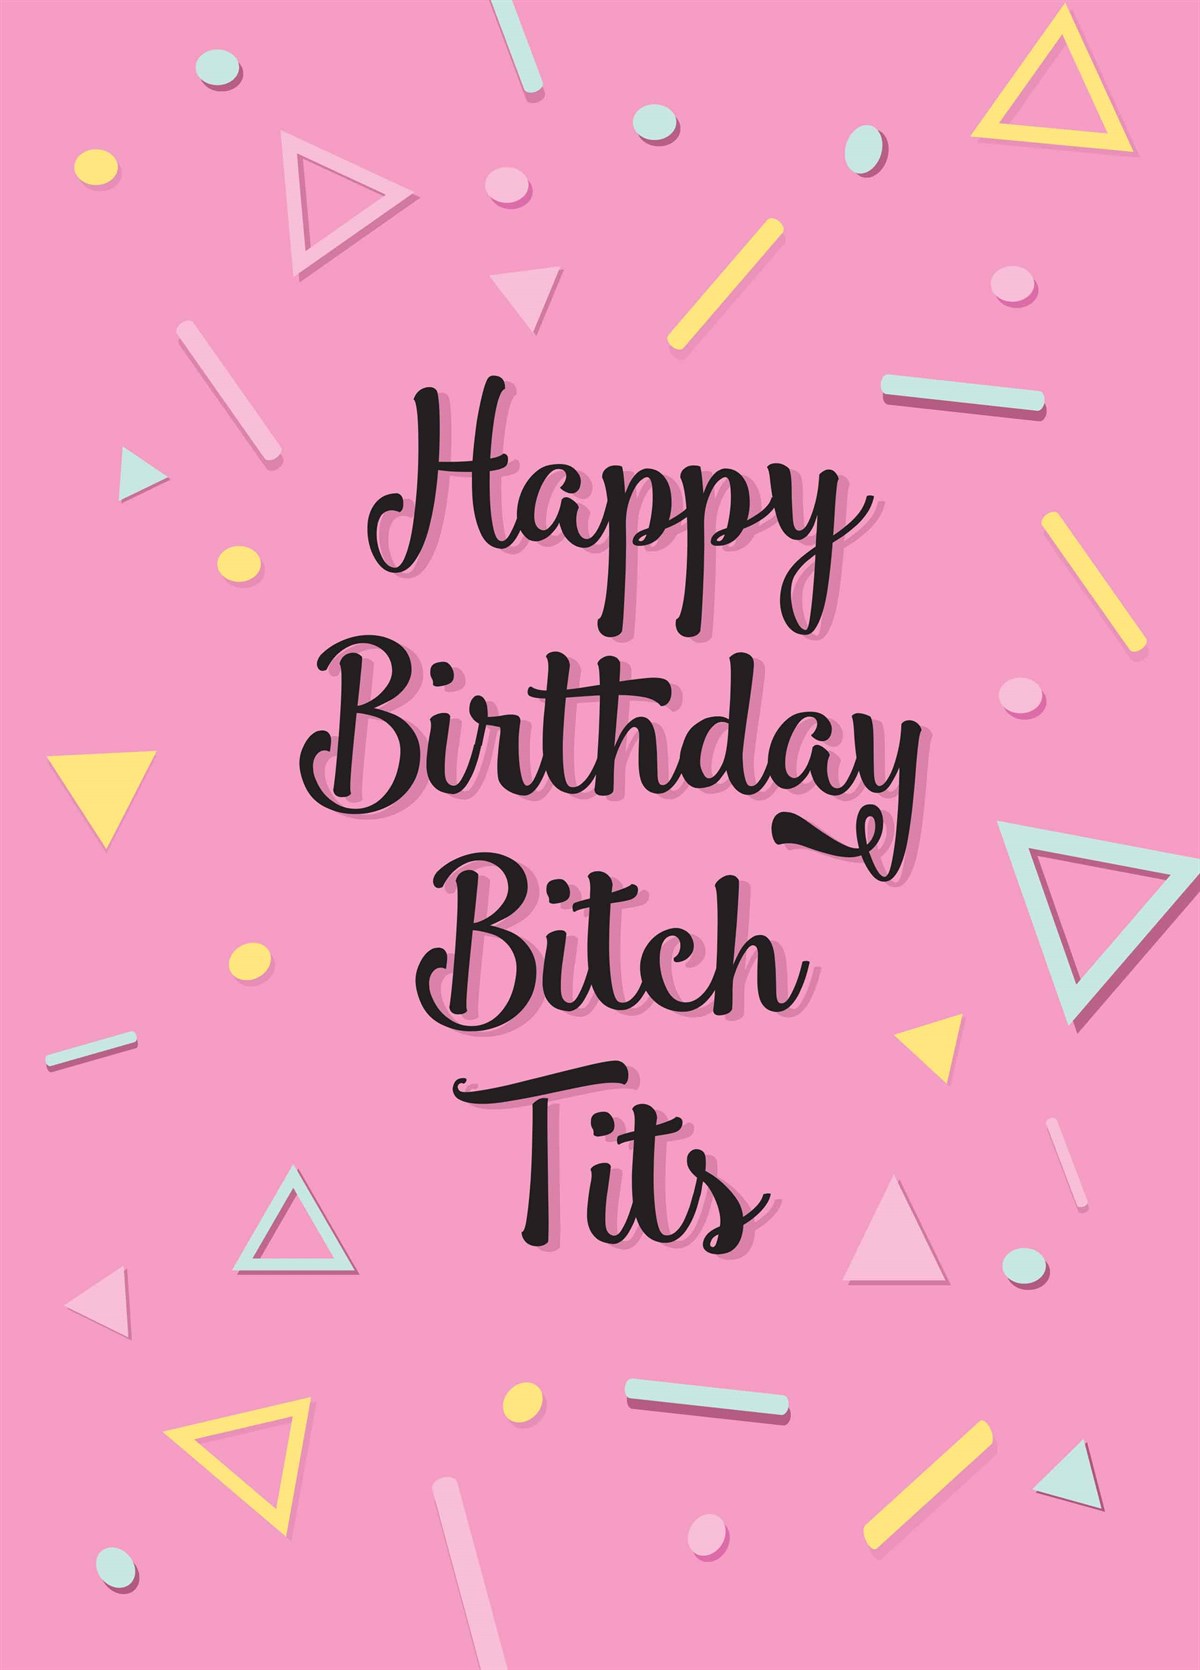 Happy Birthday Bitch Tits. 